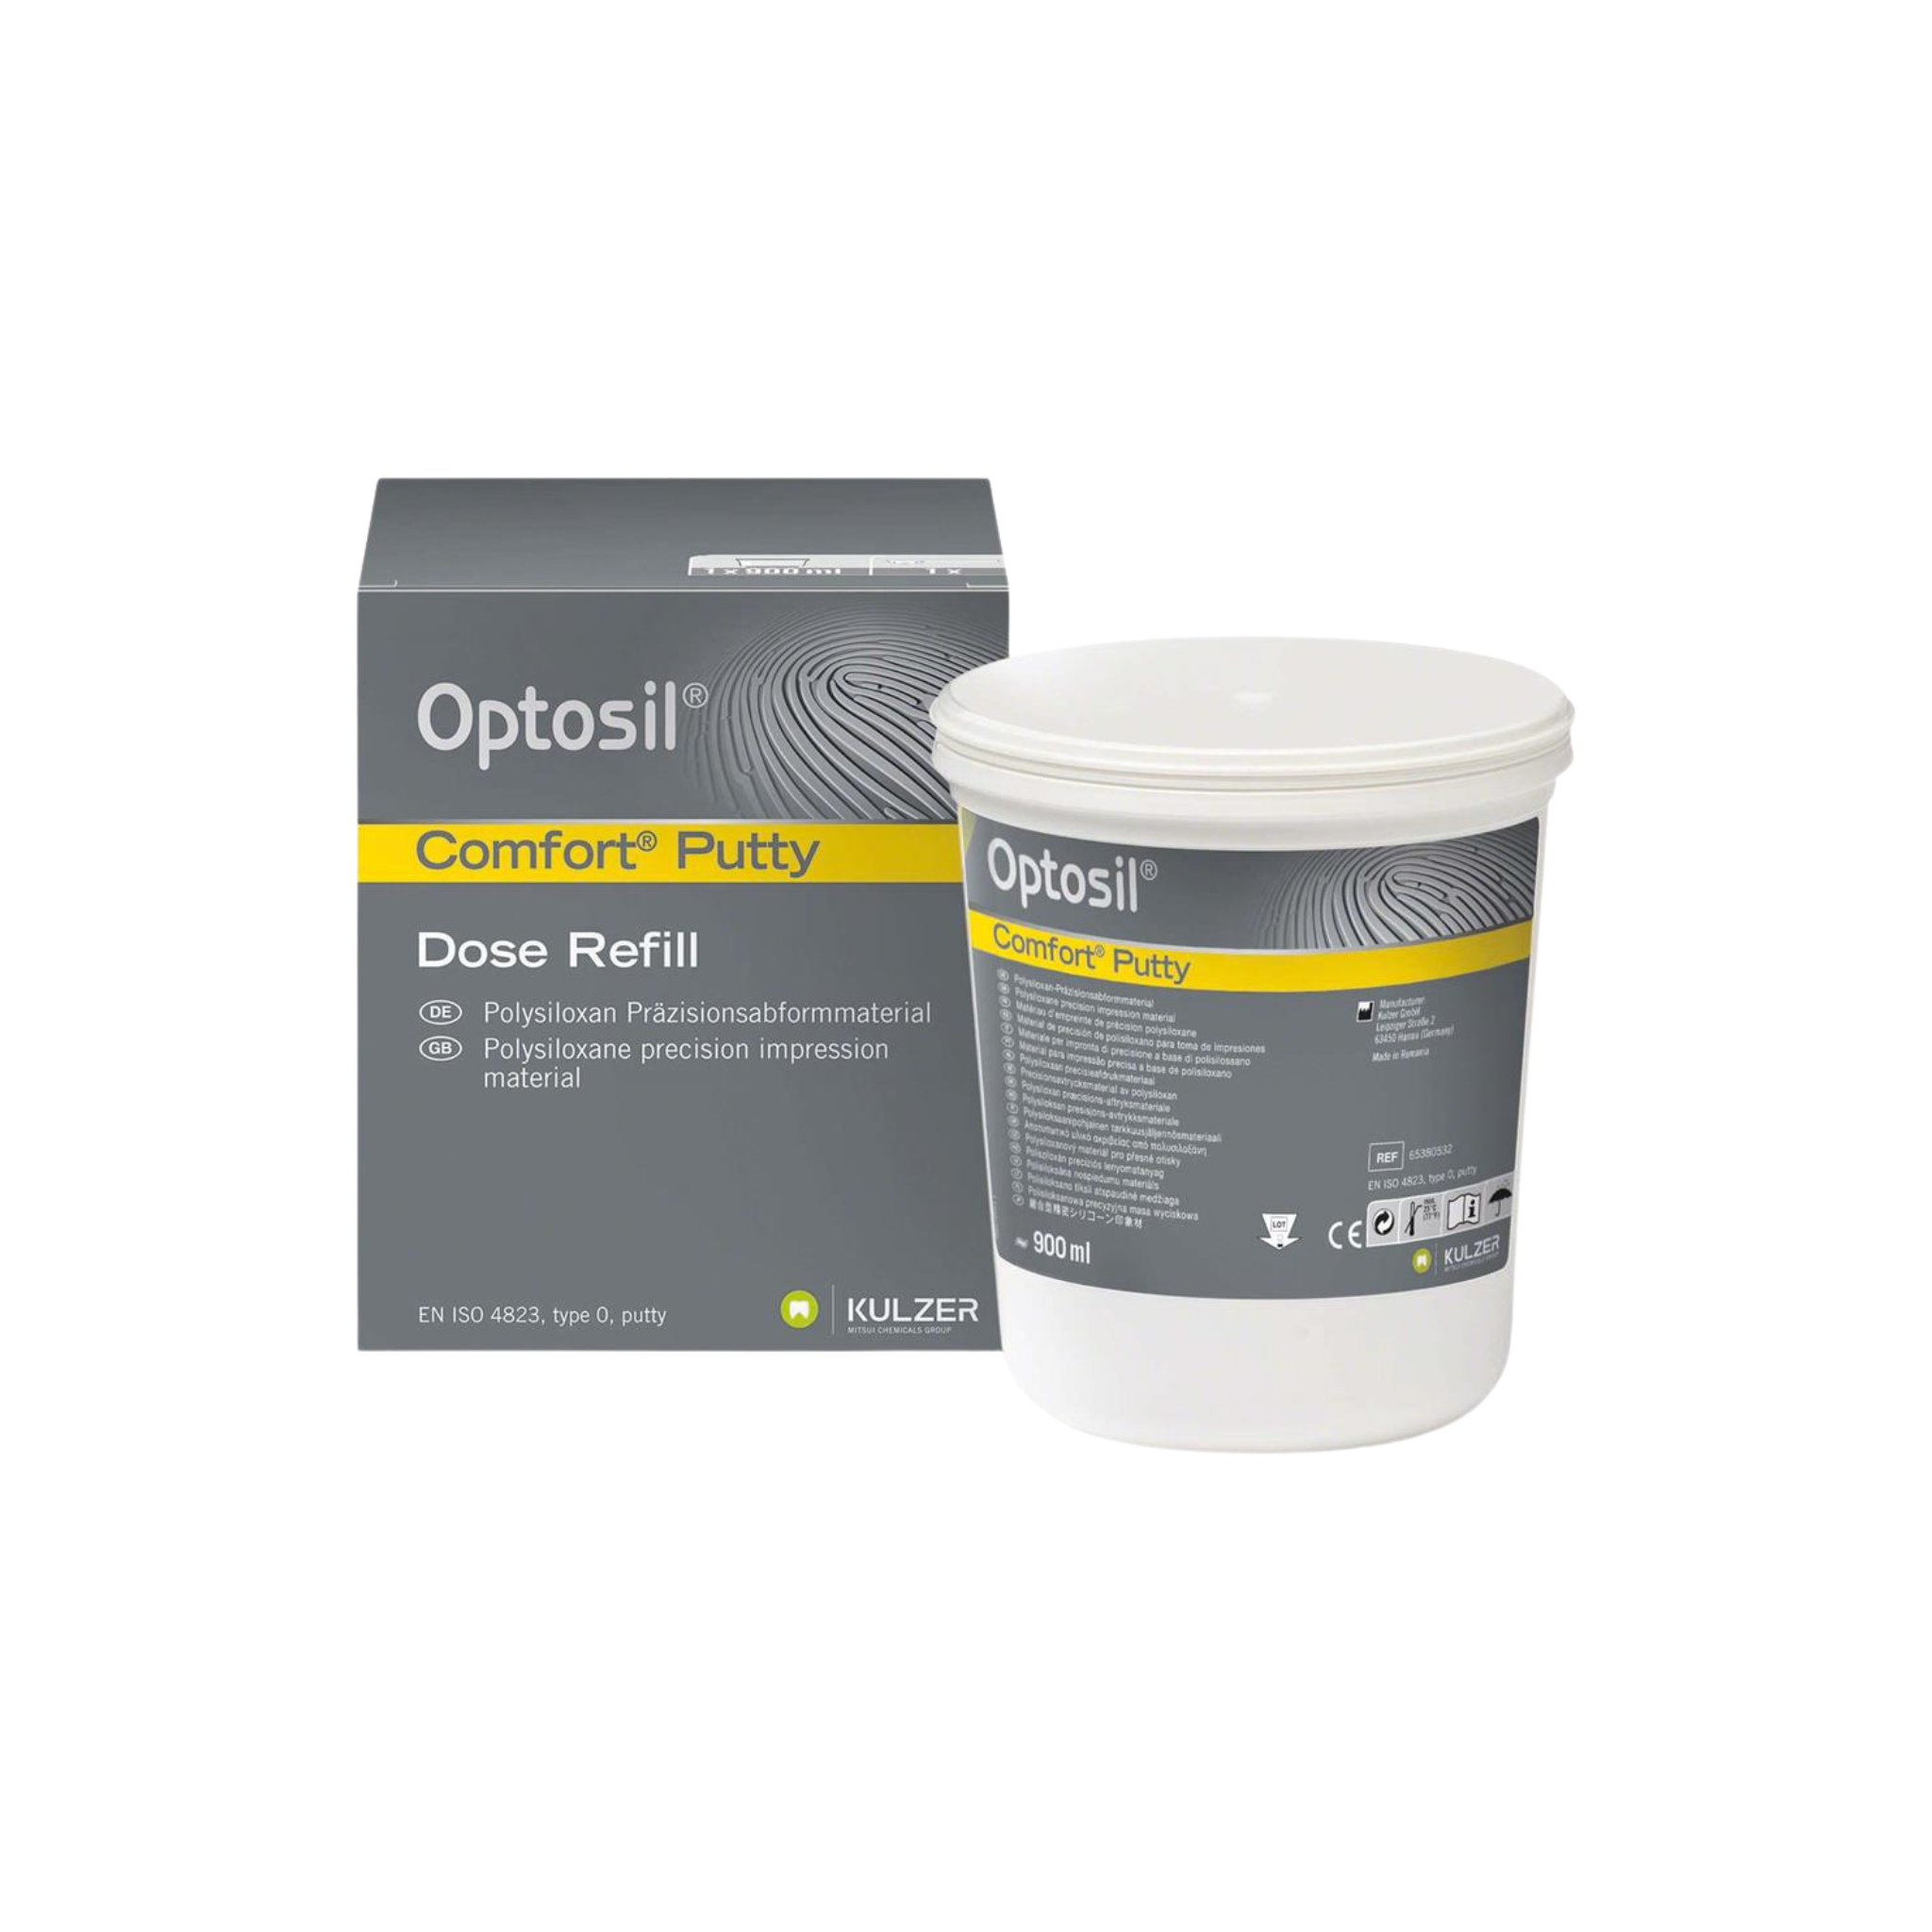 Optosil Comfort Putty 900 ml can